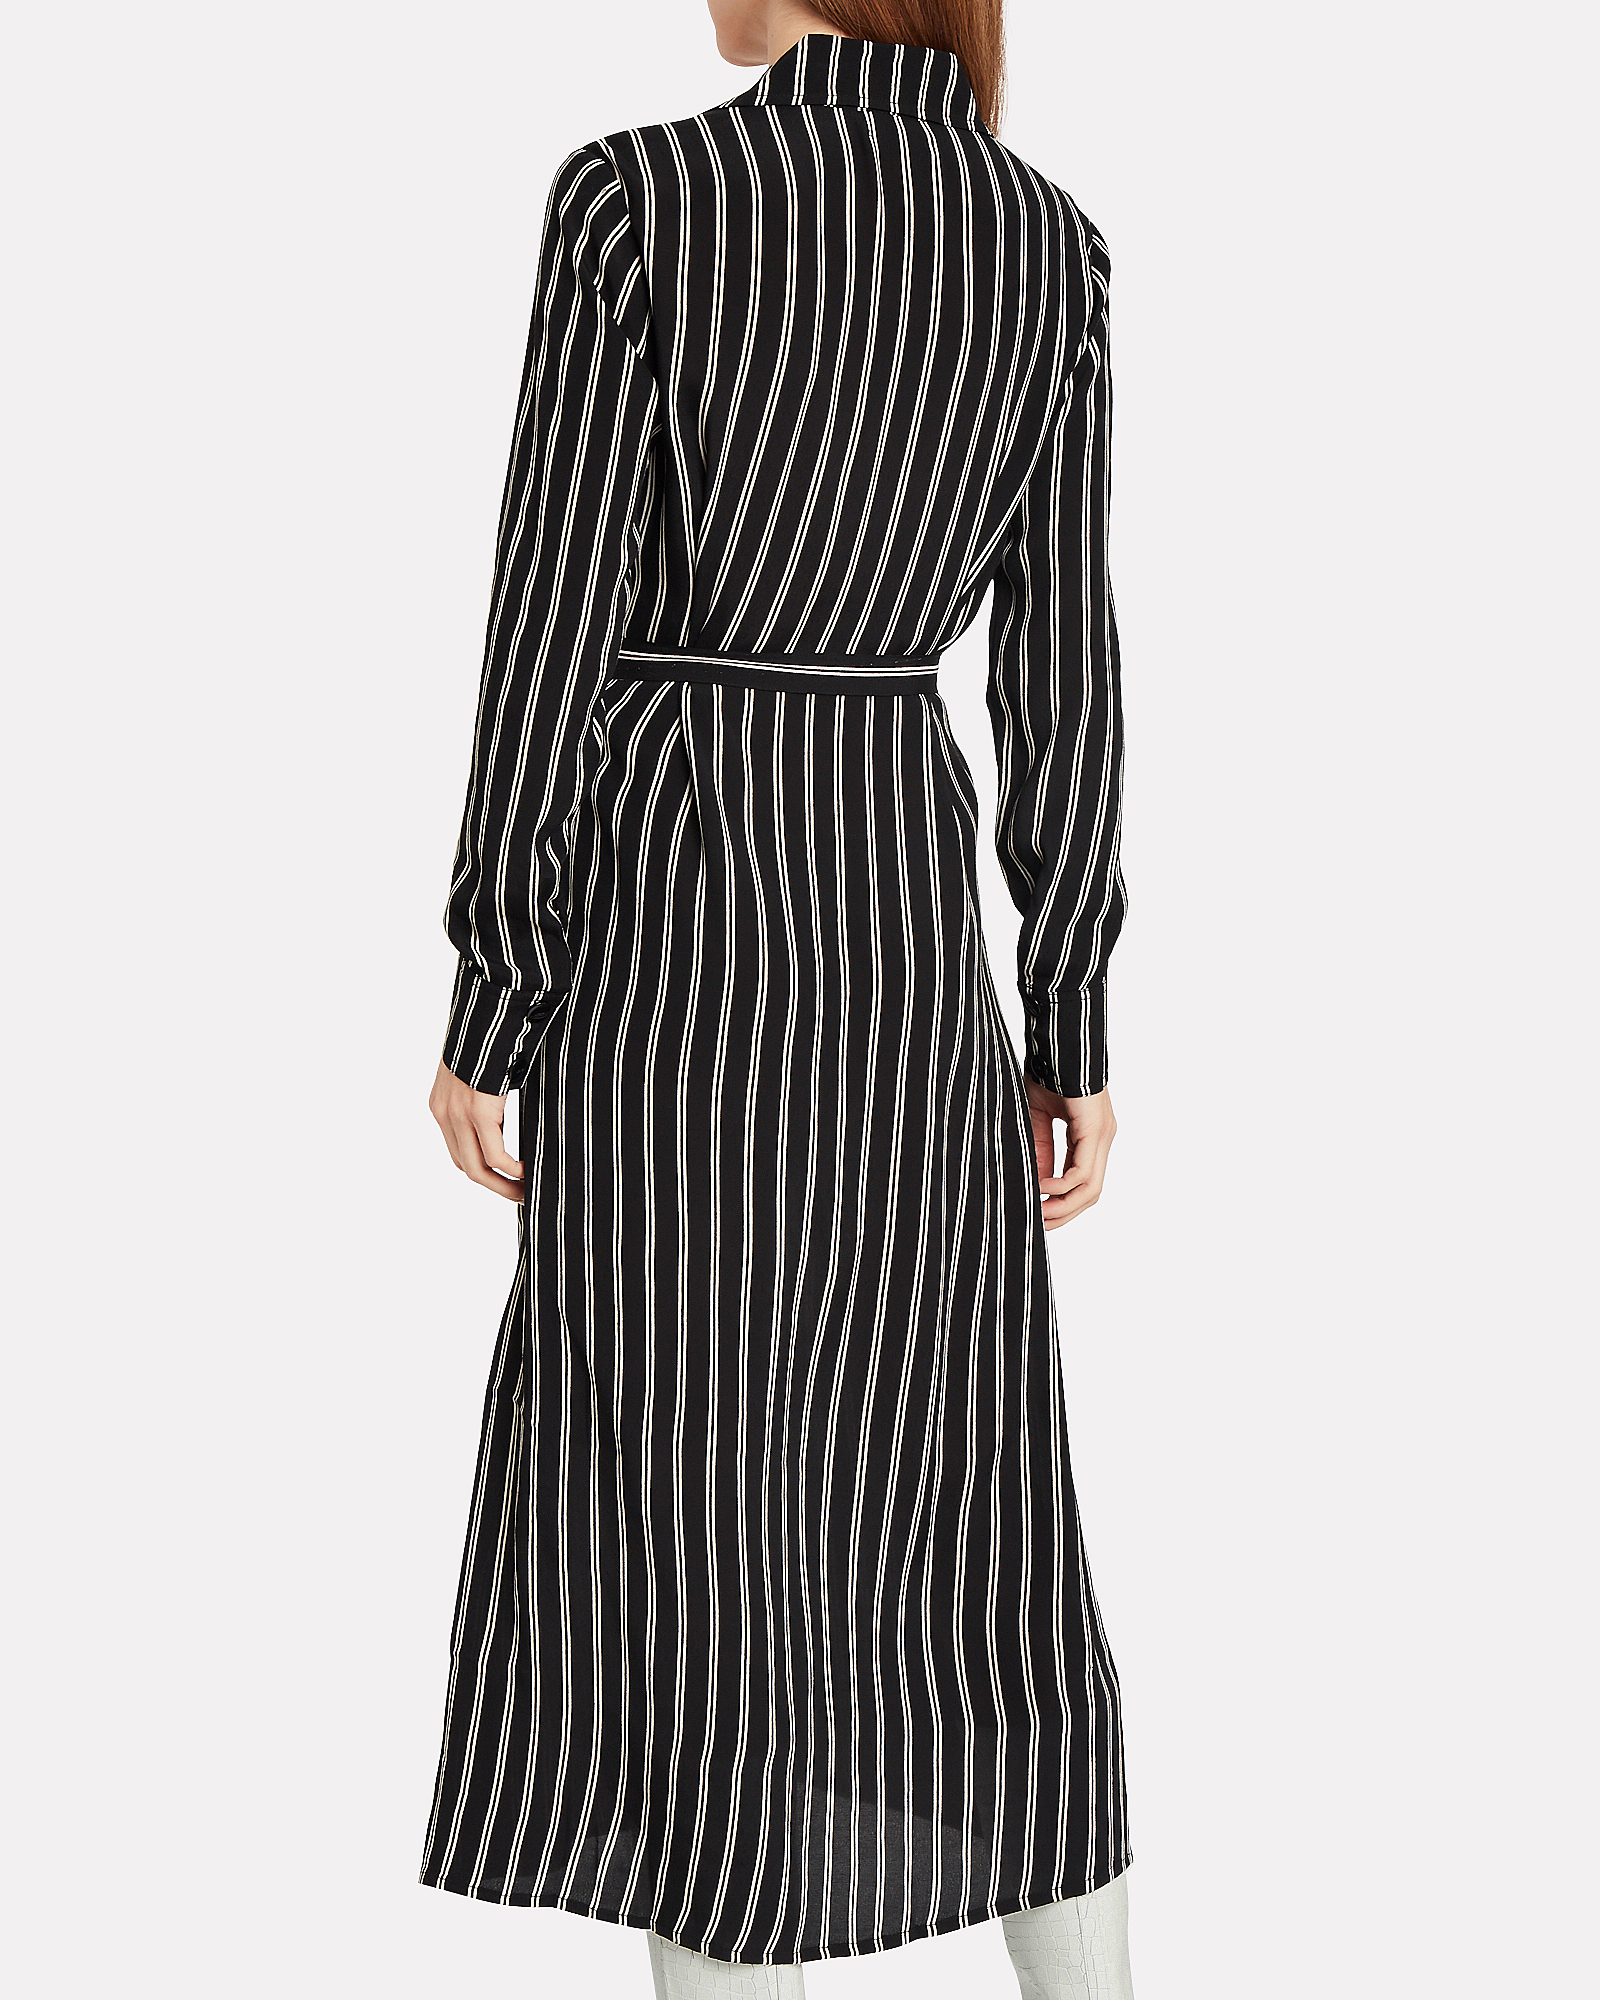 Flynn Skye | Sabrina Striped Shirt Dress | INTERMIX®